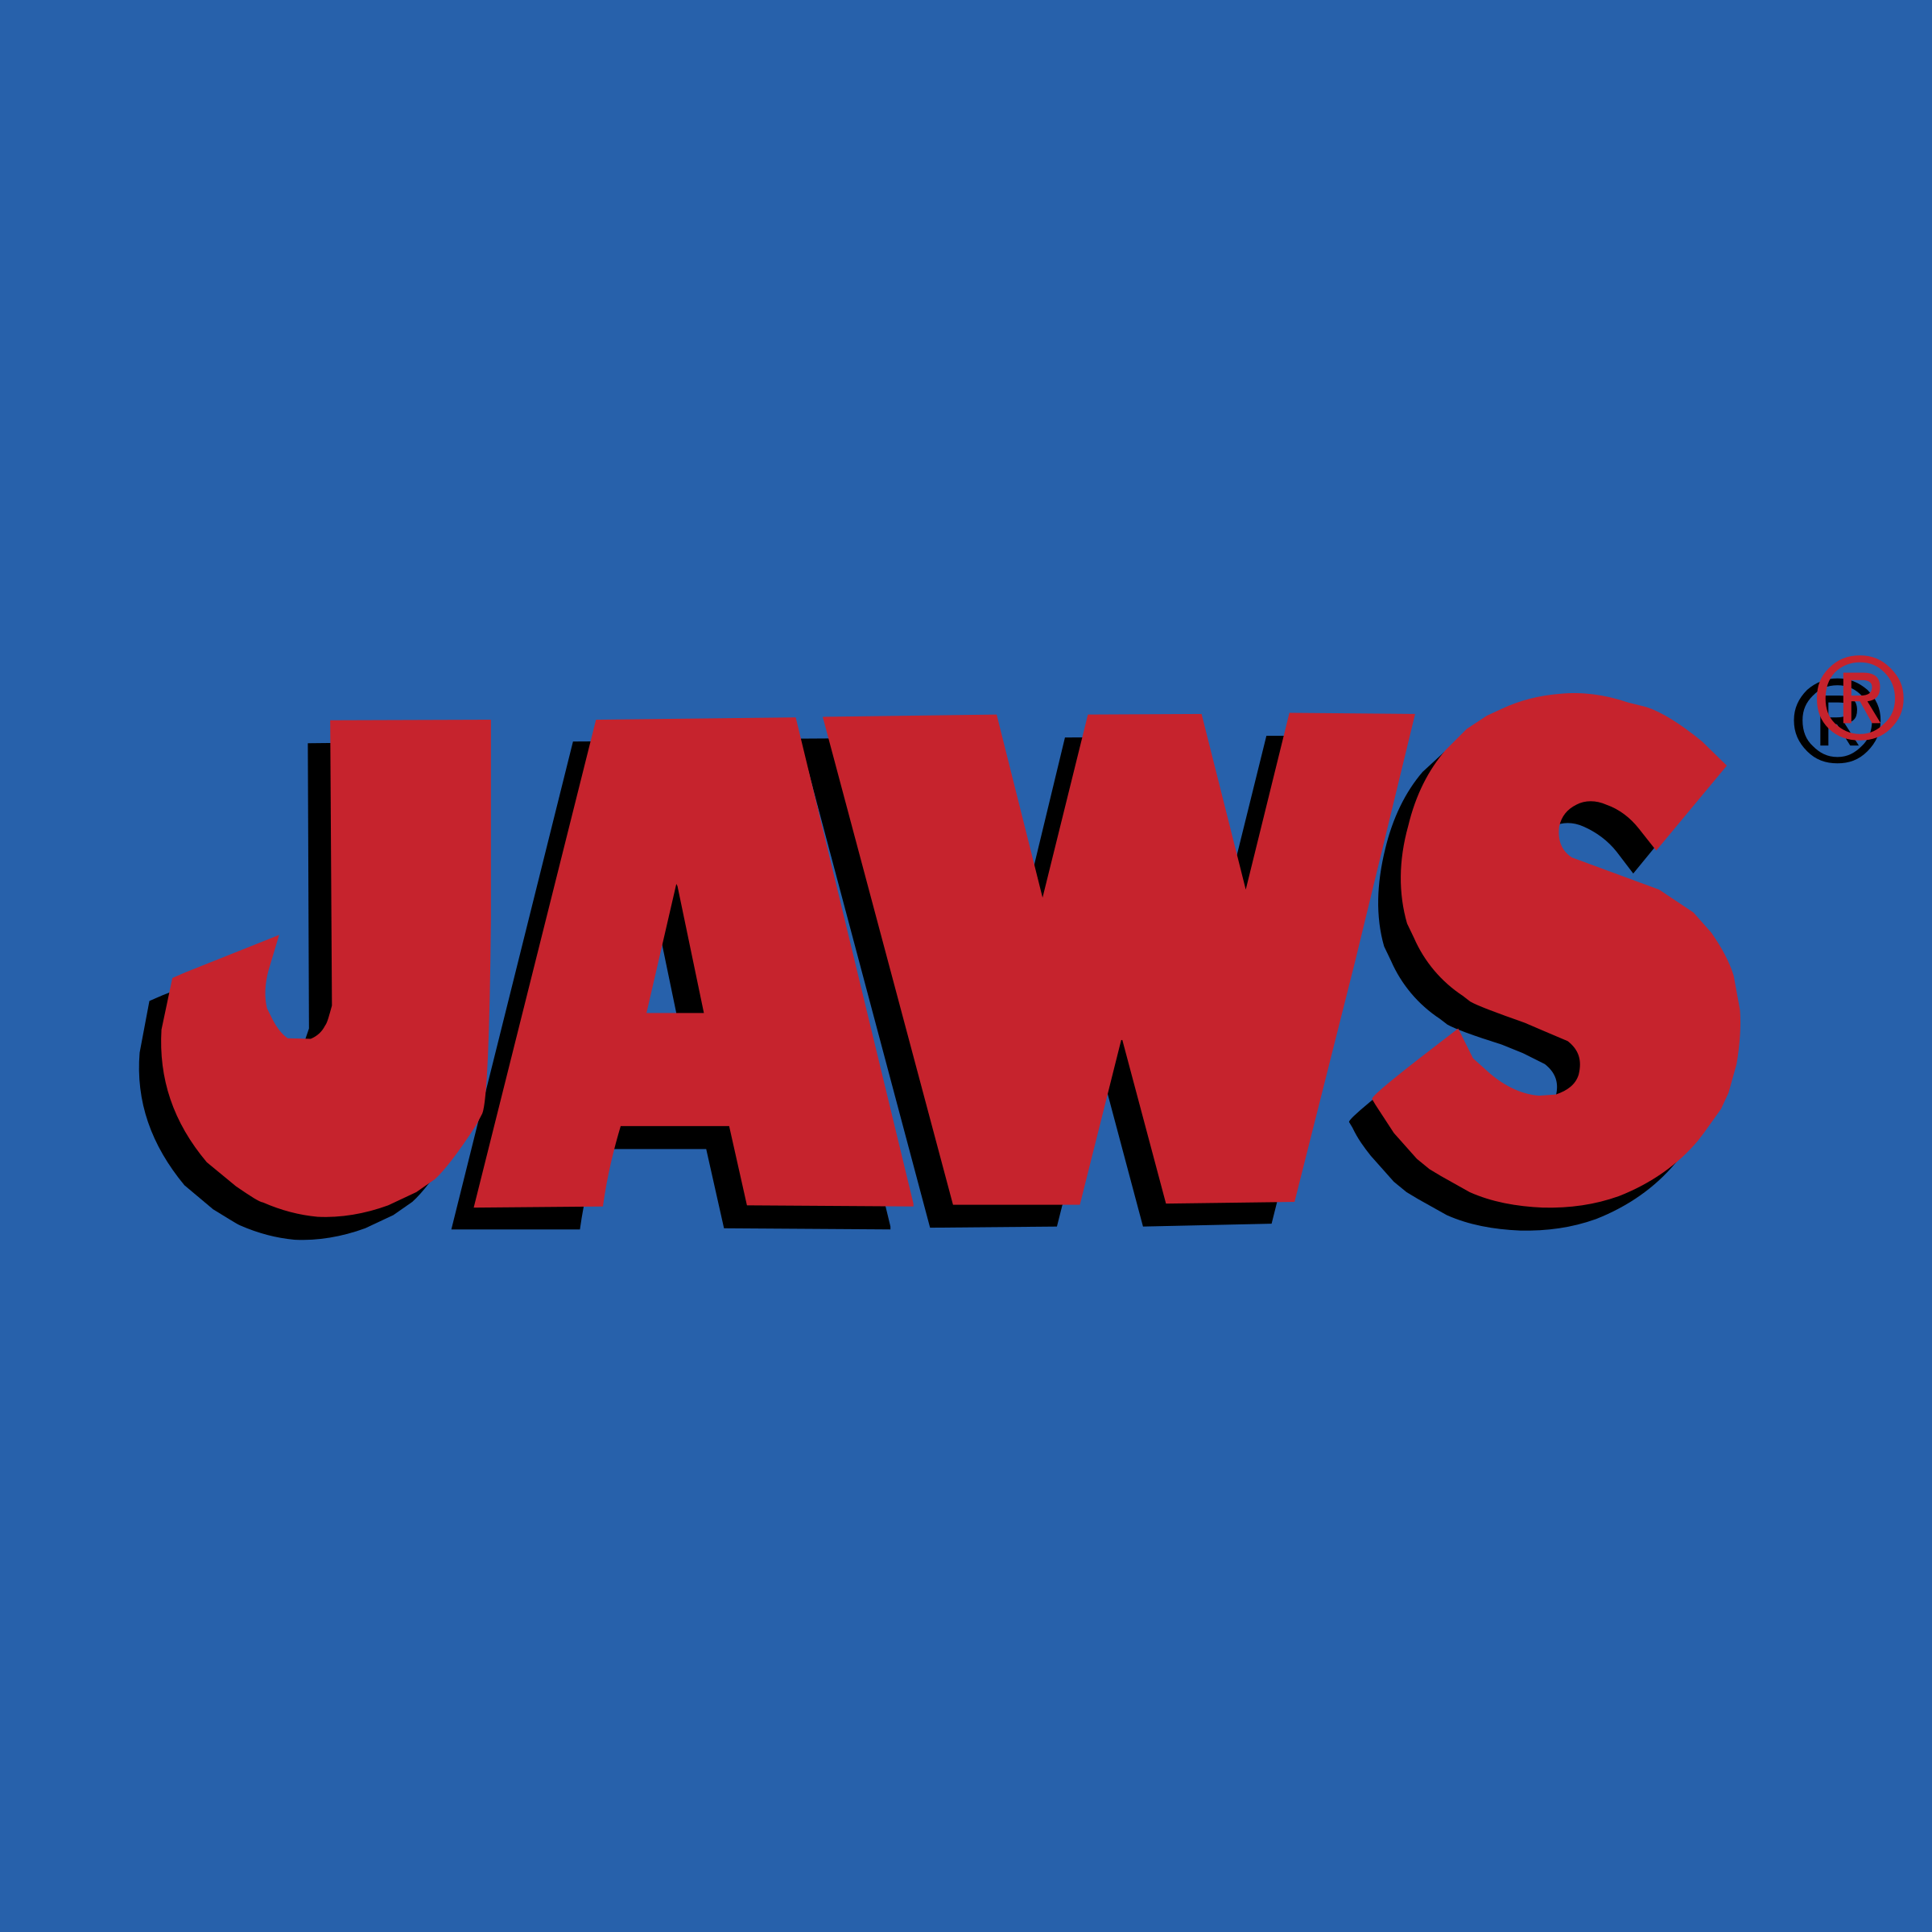 Jaws Logo - Jaws Logo PNG Transparent & SVG Vector - Freebie Supply